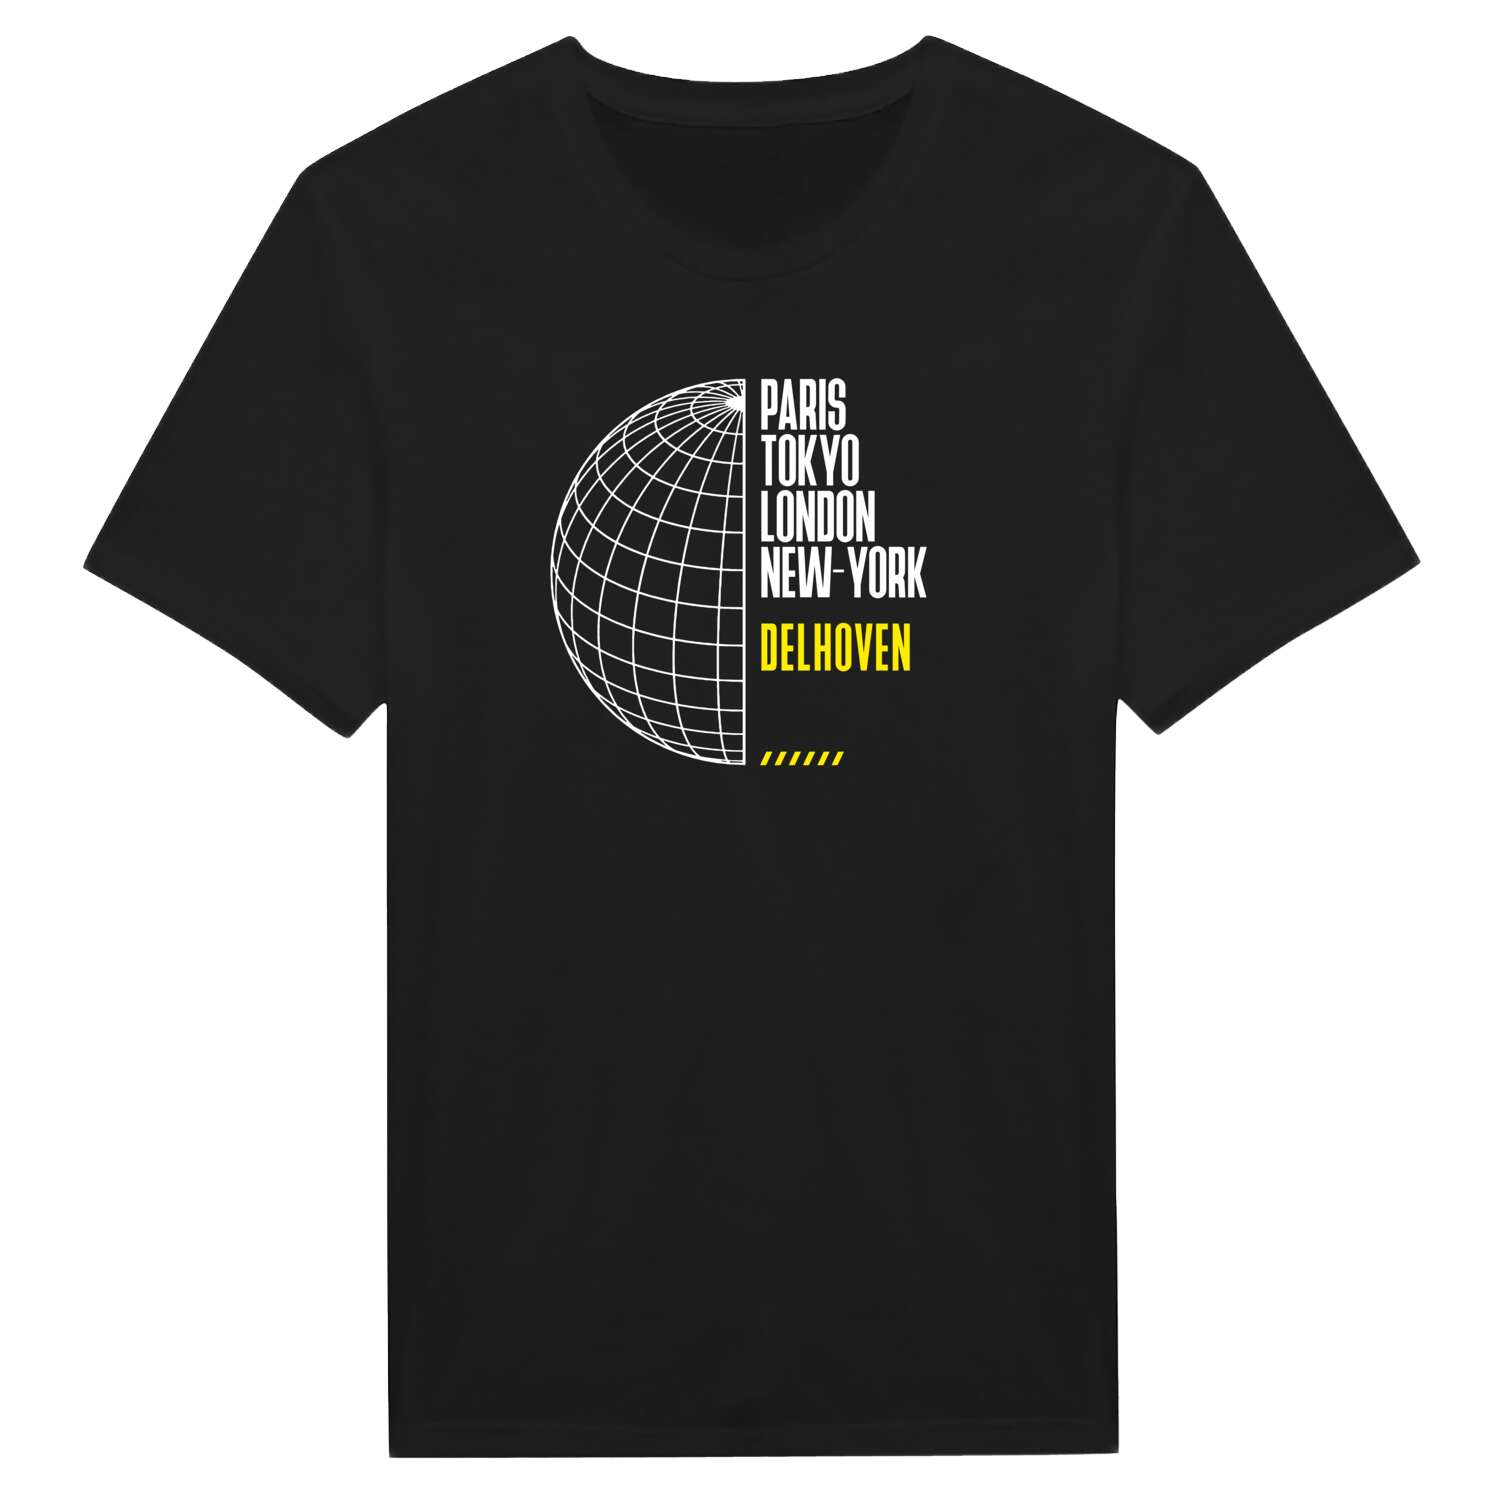 Delhoven T-Shirt »Paris Tokyo London«